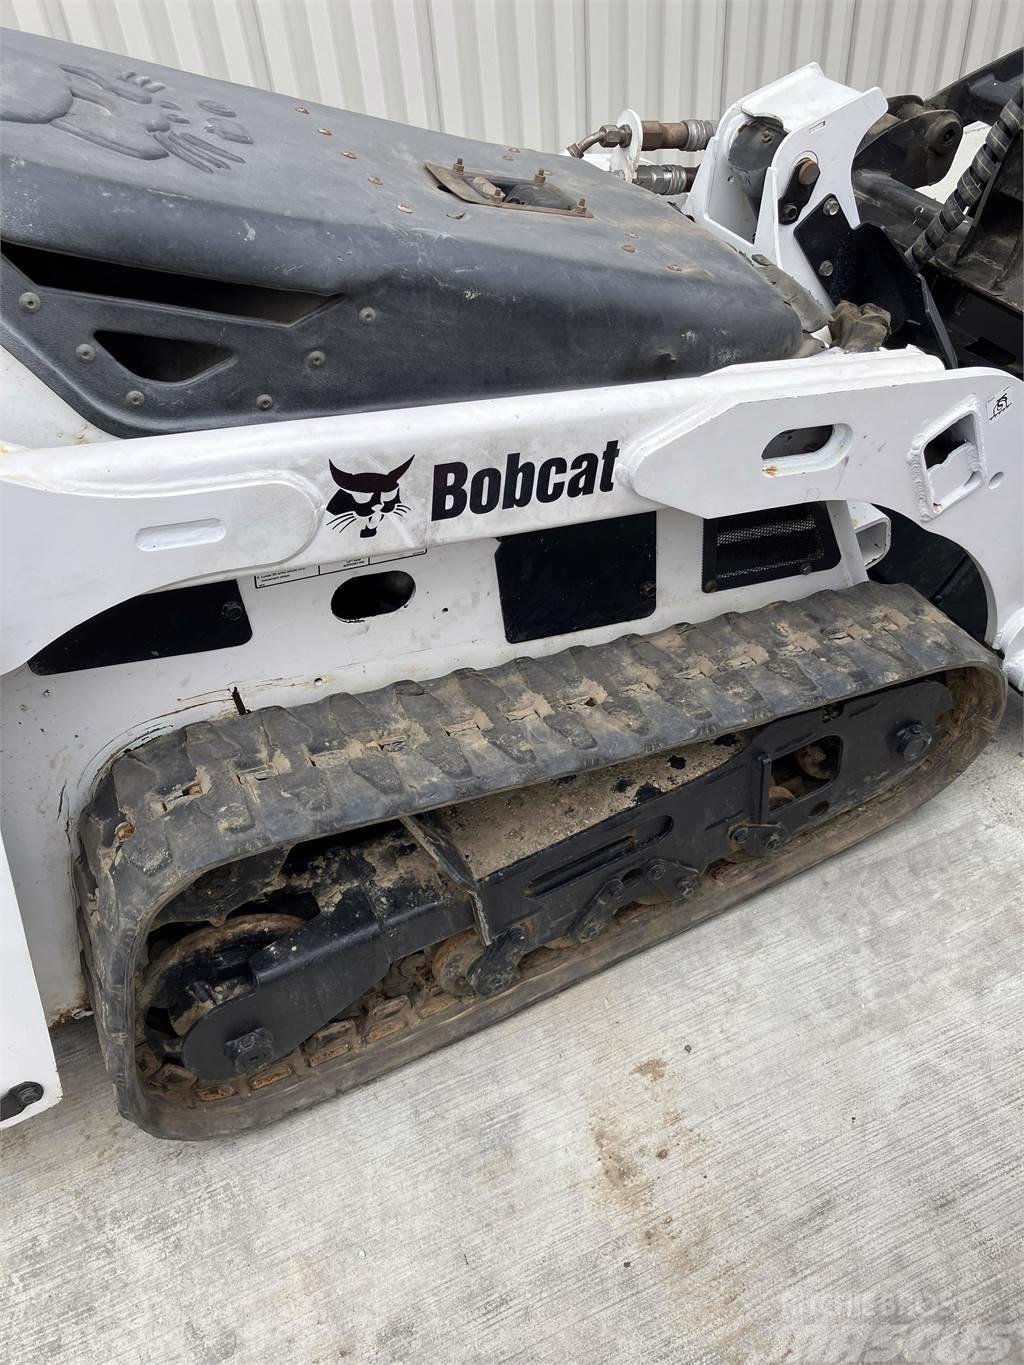 Bobcat MT52 Lietoti riteņu kompaktiekrāvēji